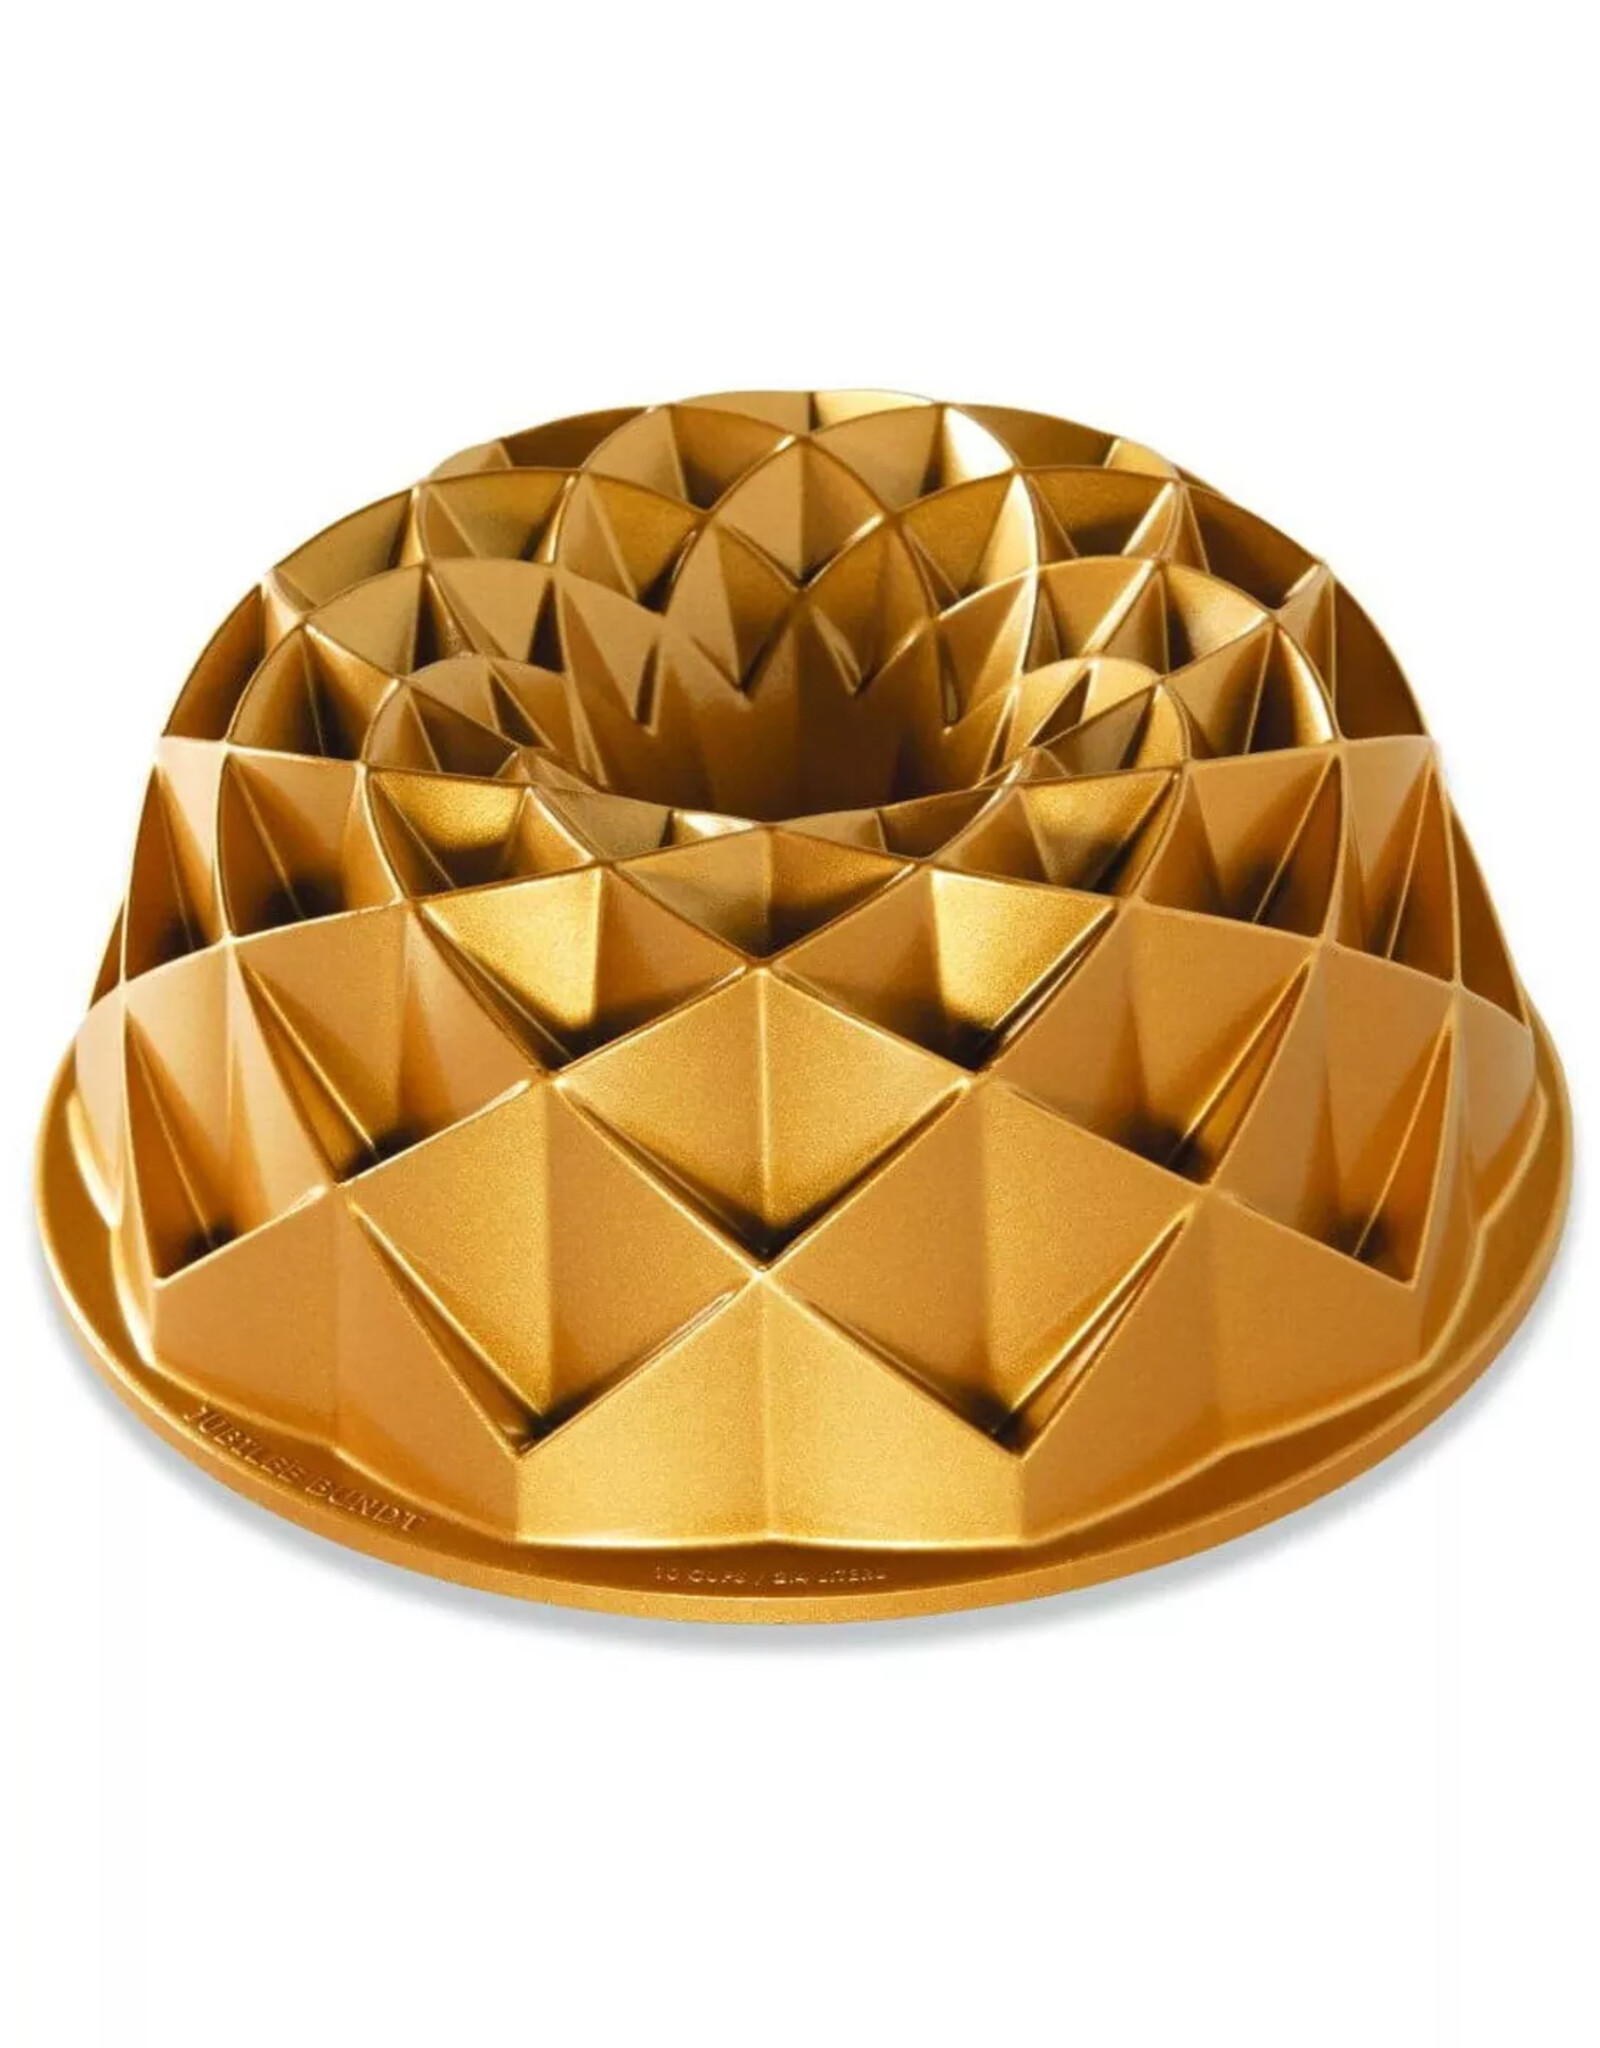 Nordic Ware GOLD Jubilee Bundt pan